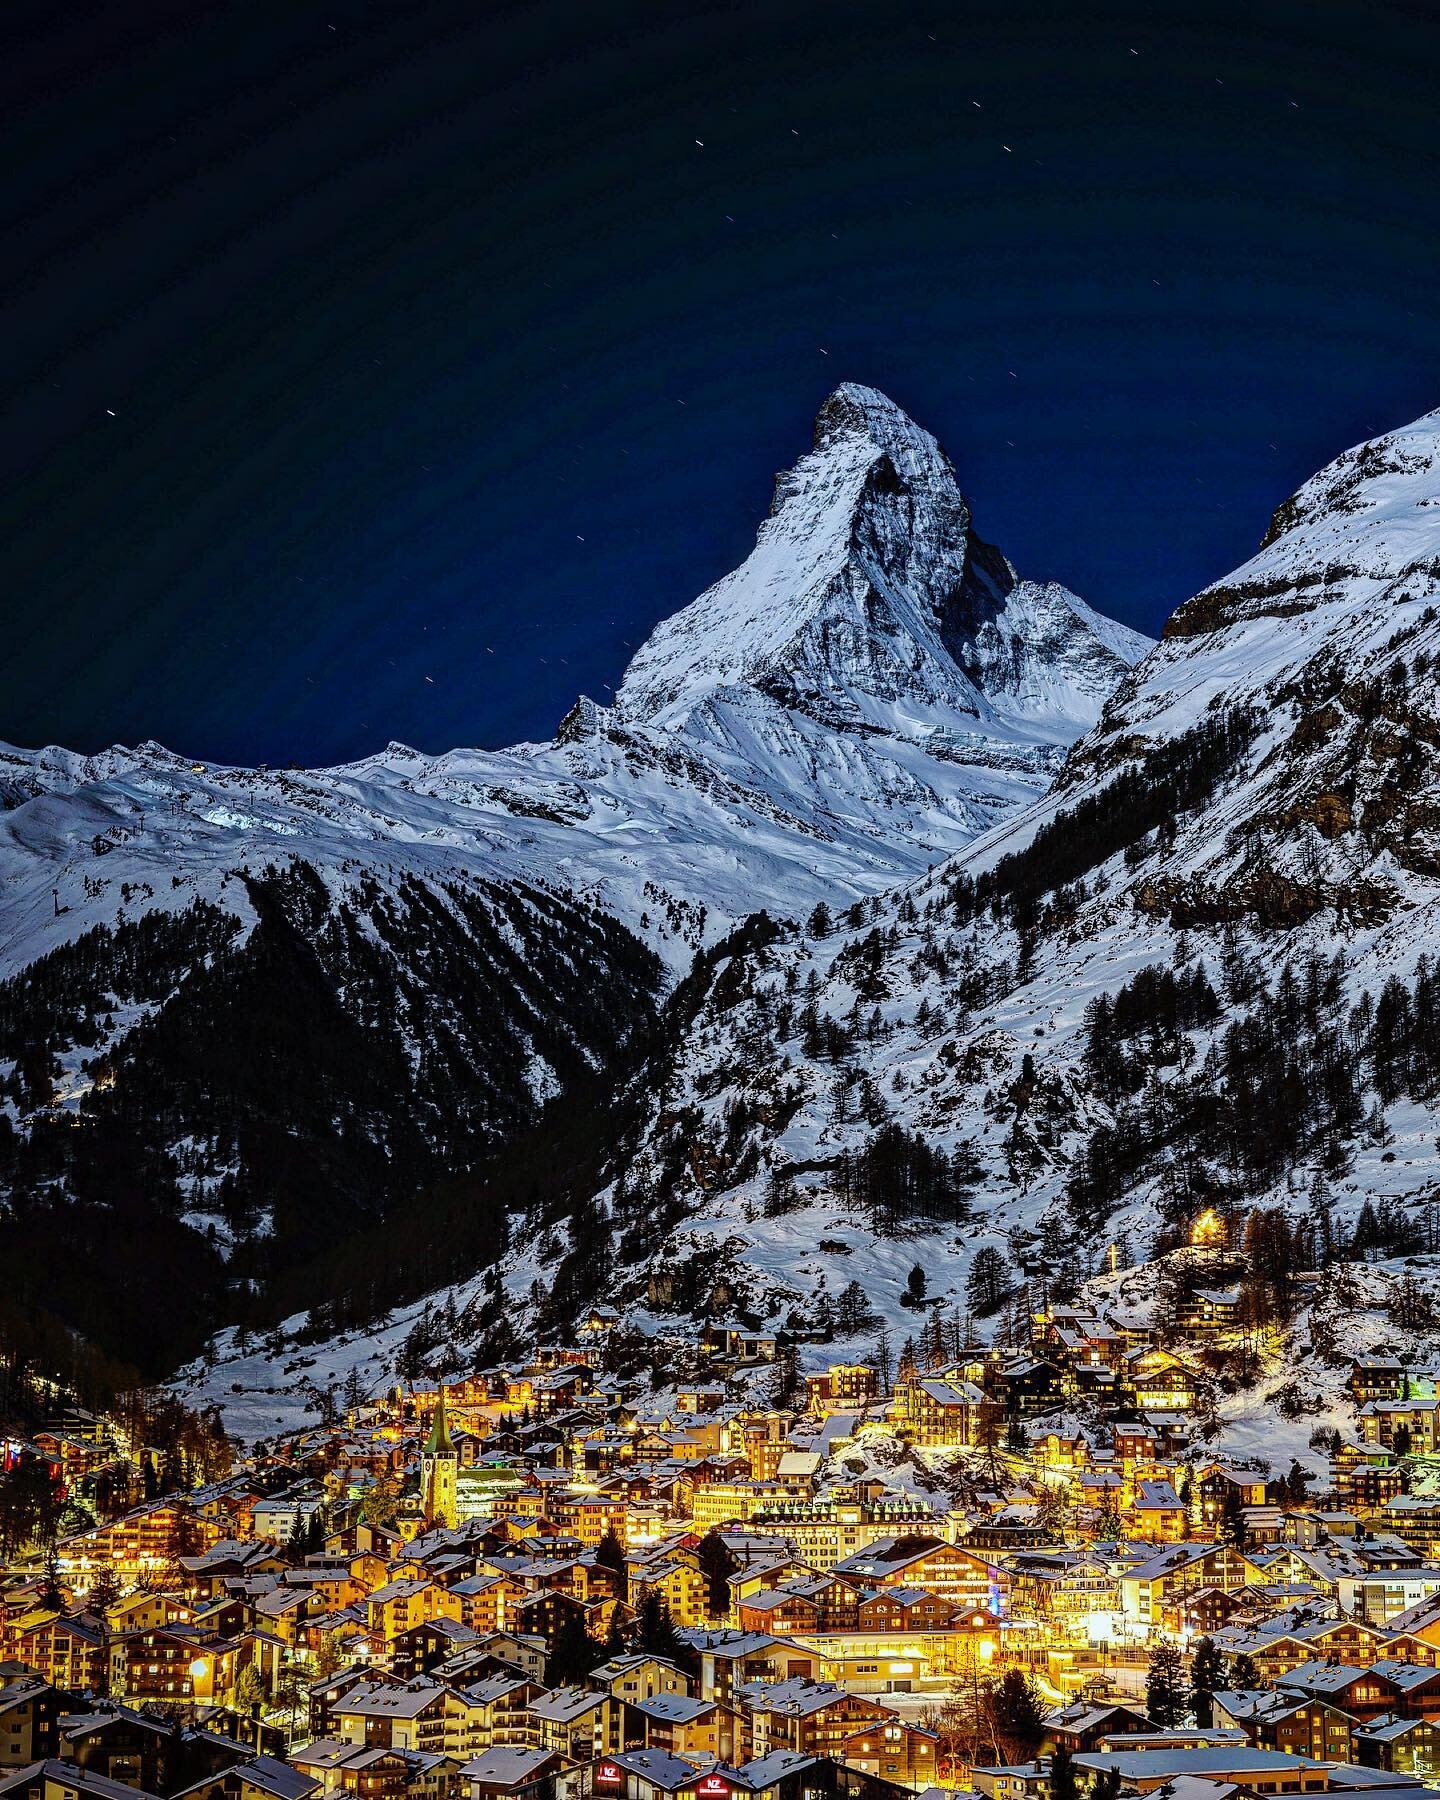 Winter in Zermatt!❄️🎄🇨🇭www.dli-travel.com #travelphotography #switzerland #zermatt #dlitravel #arrivederciwineandjazz #vacation #swissalps